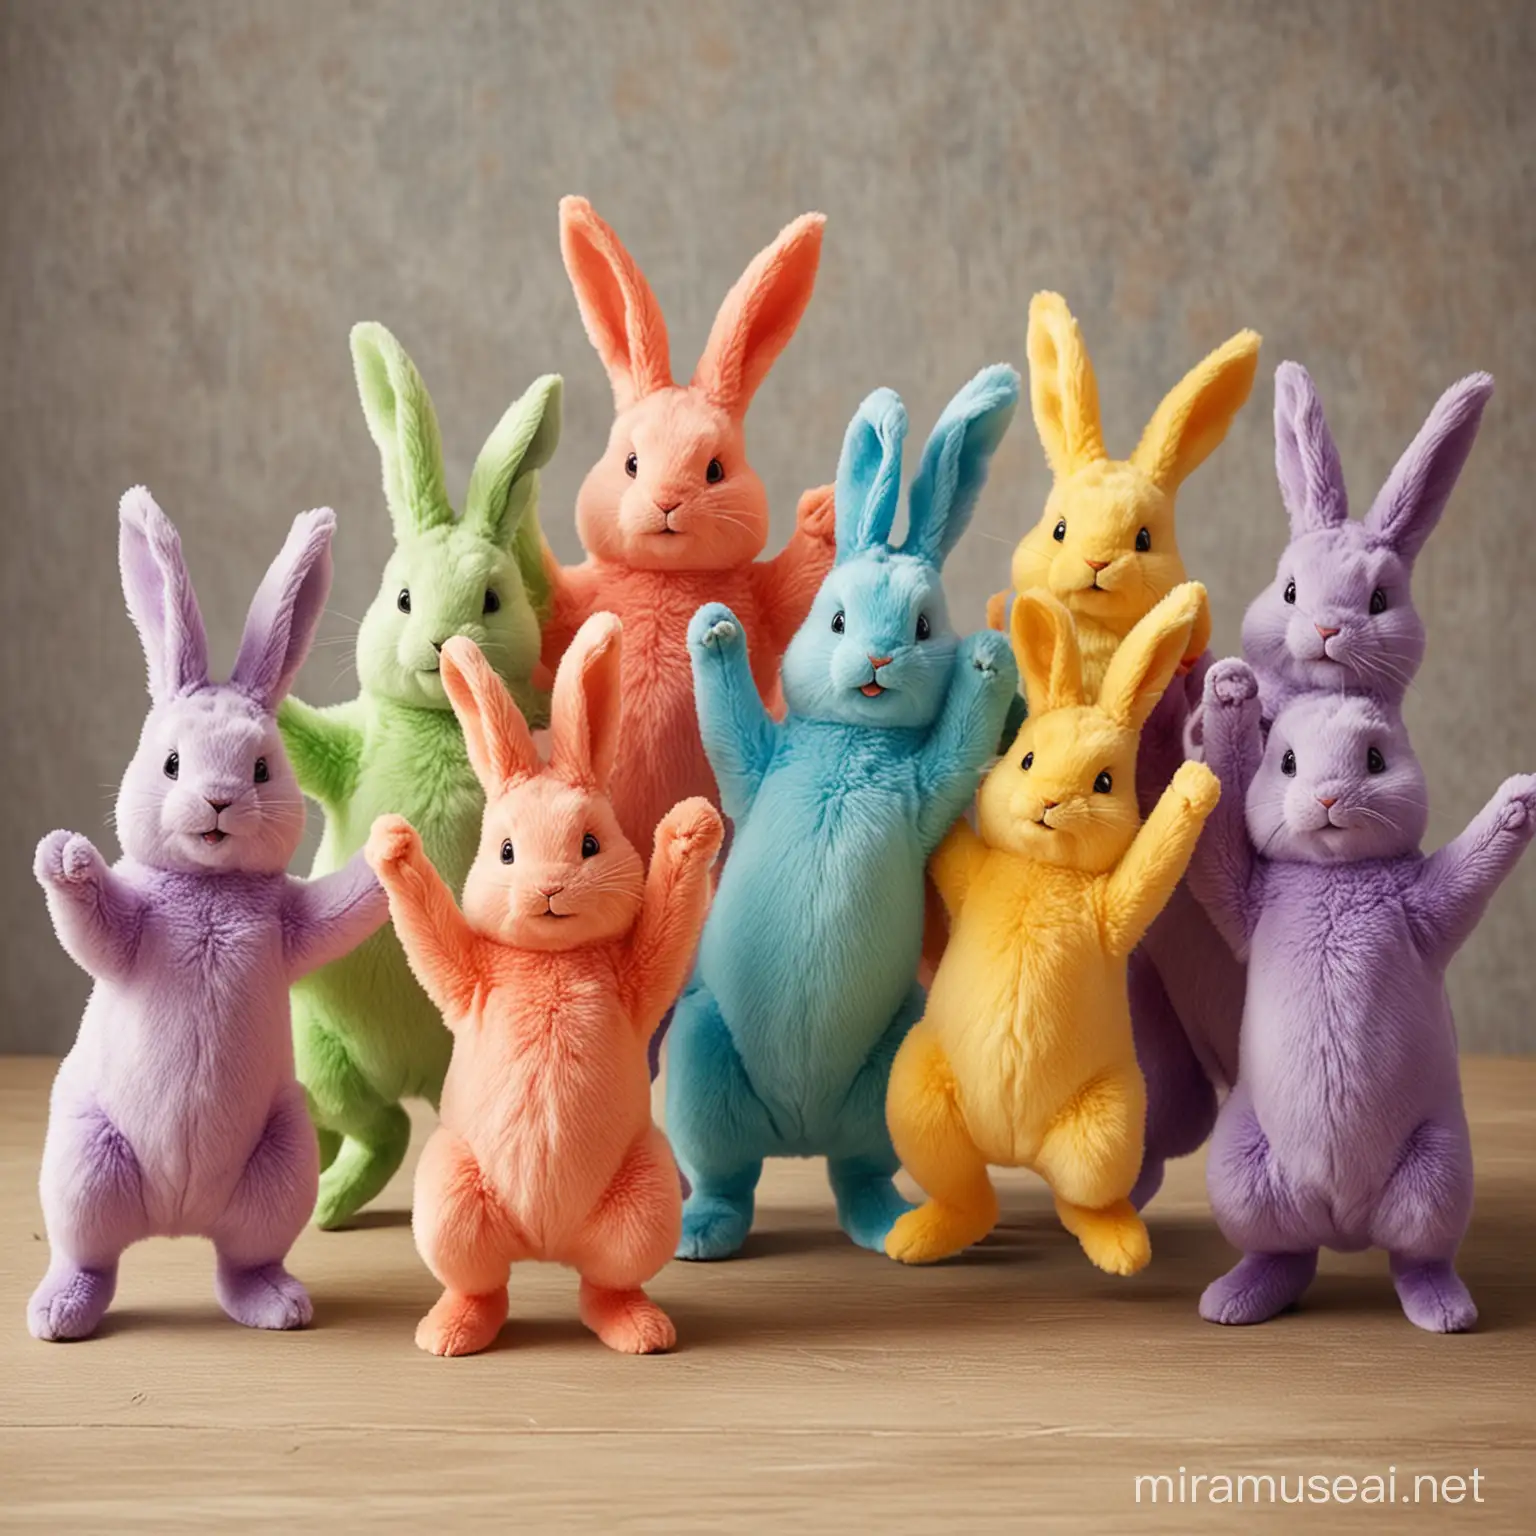 Joyful Easter Bunnies Celebrating with Vibrant Dance Moves